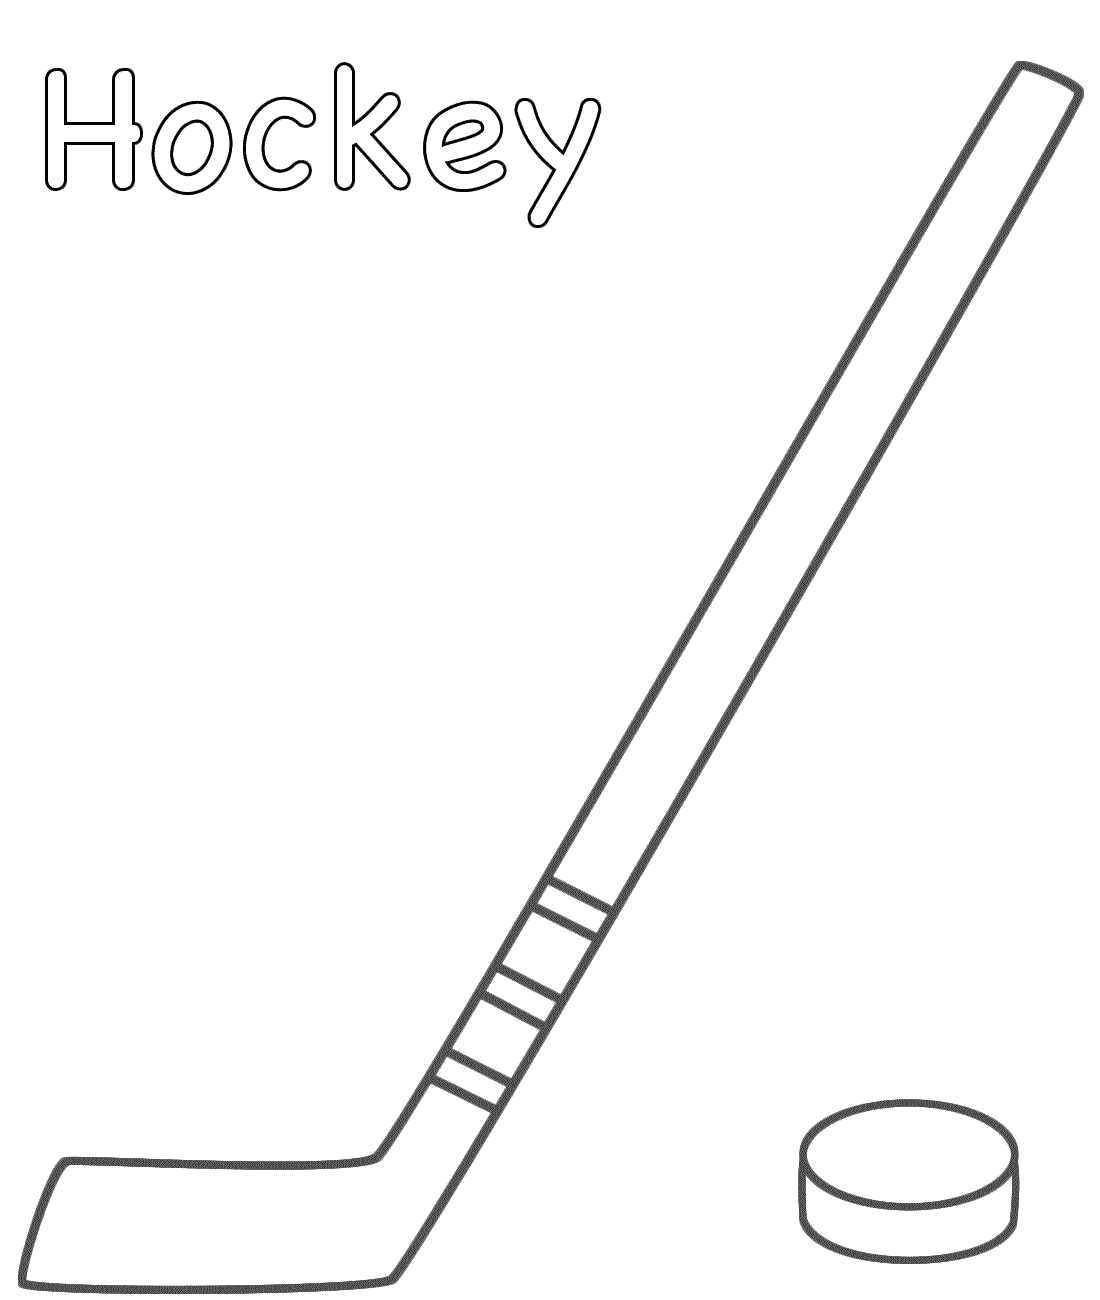 Hockey Sticks Crossed - Clipa - Hockey Stick Clip Art